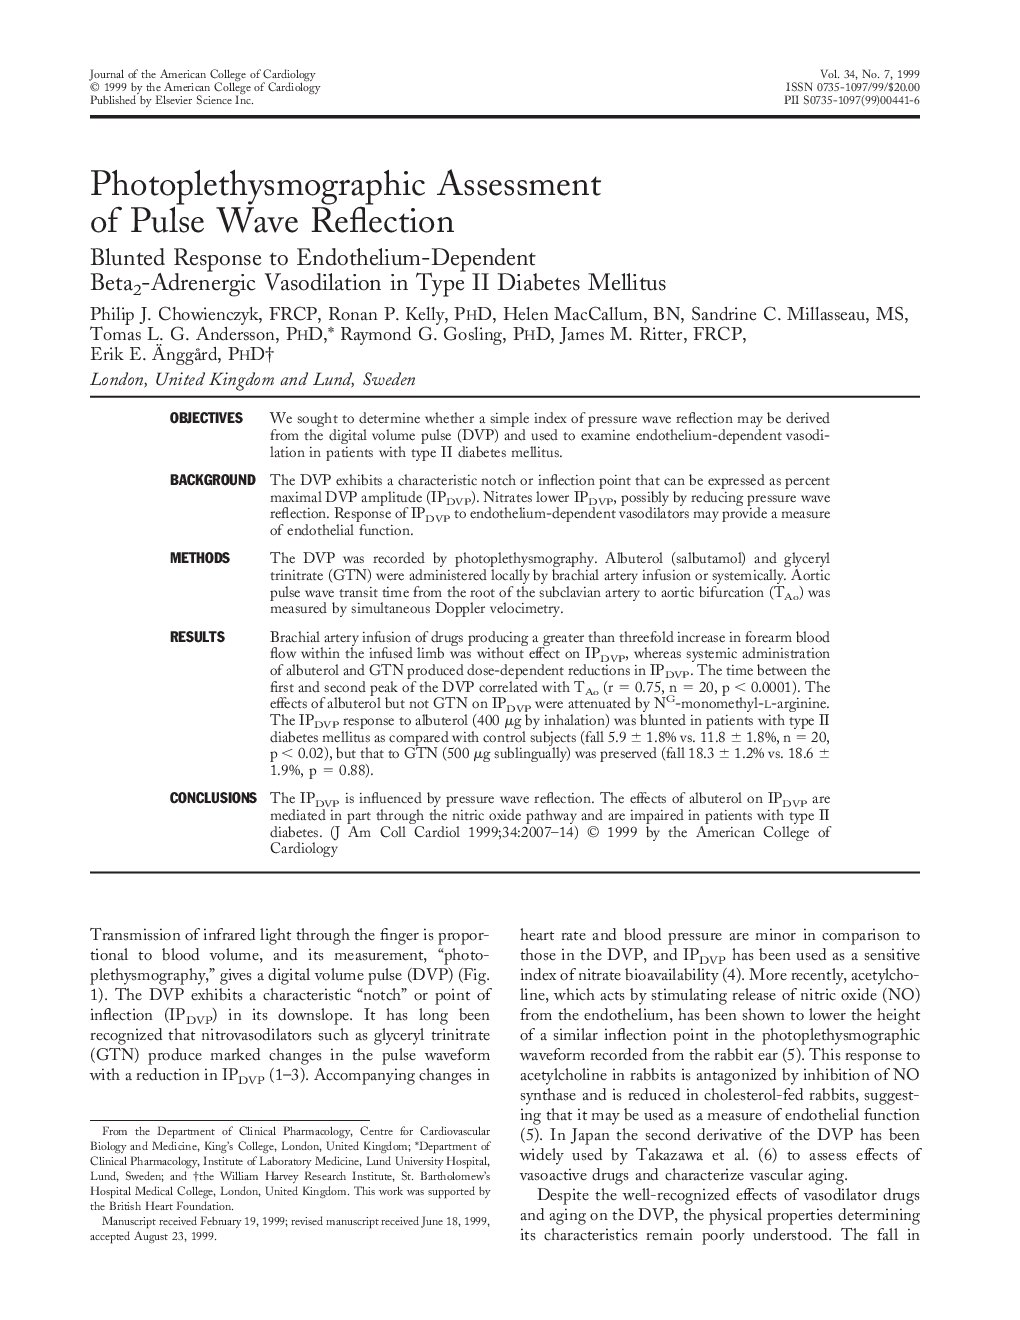 Photoplethysmographic assessment of pulse wave reflection : Blunted response to endothelium-dependent beta2-adrenergic vasodilation in type II diabetes mellitus